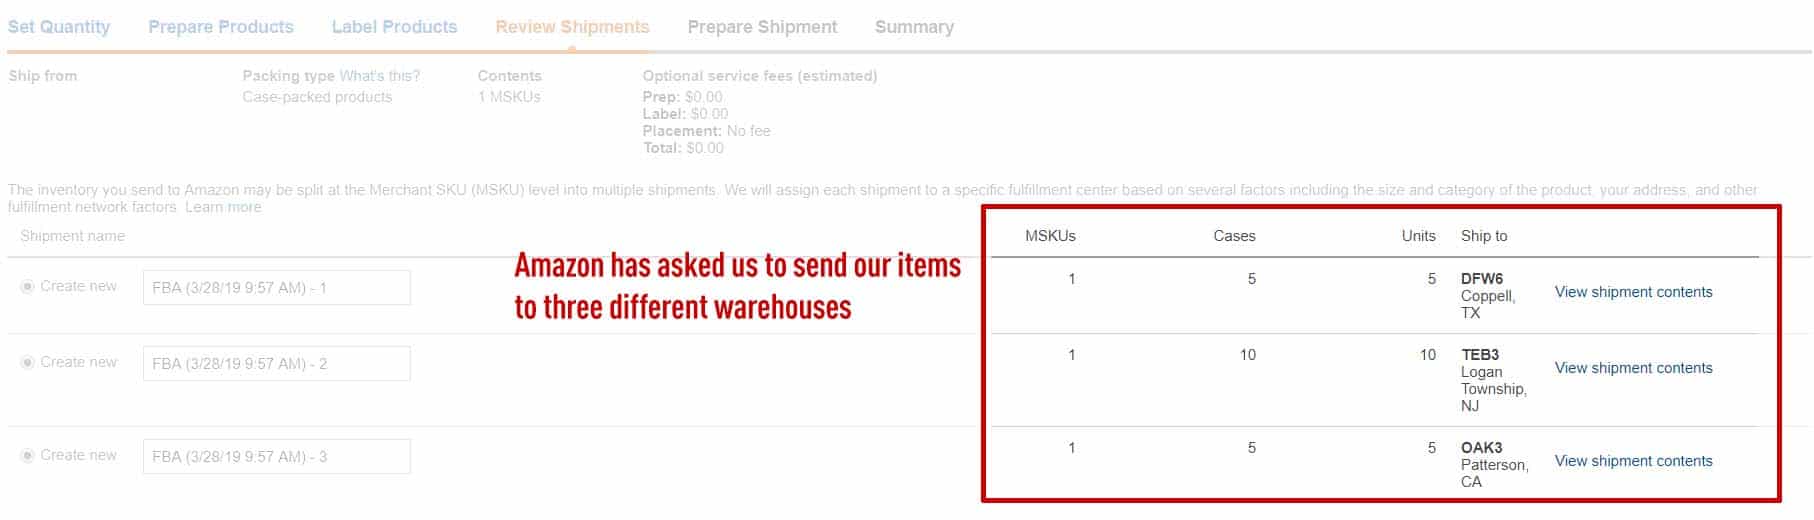 prepare shipments on Amazon